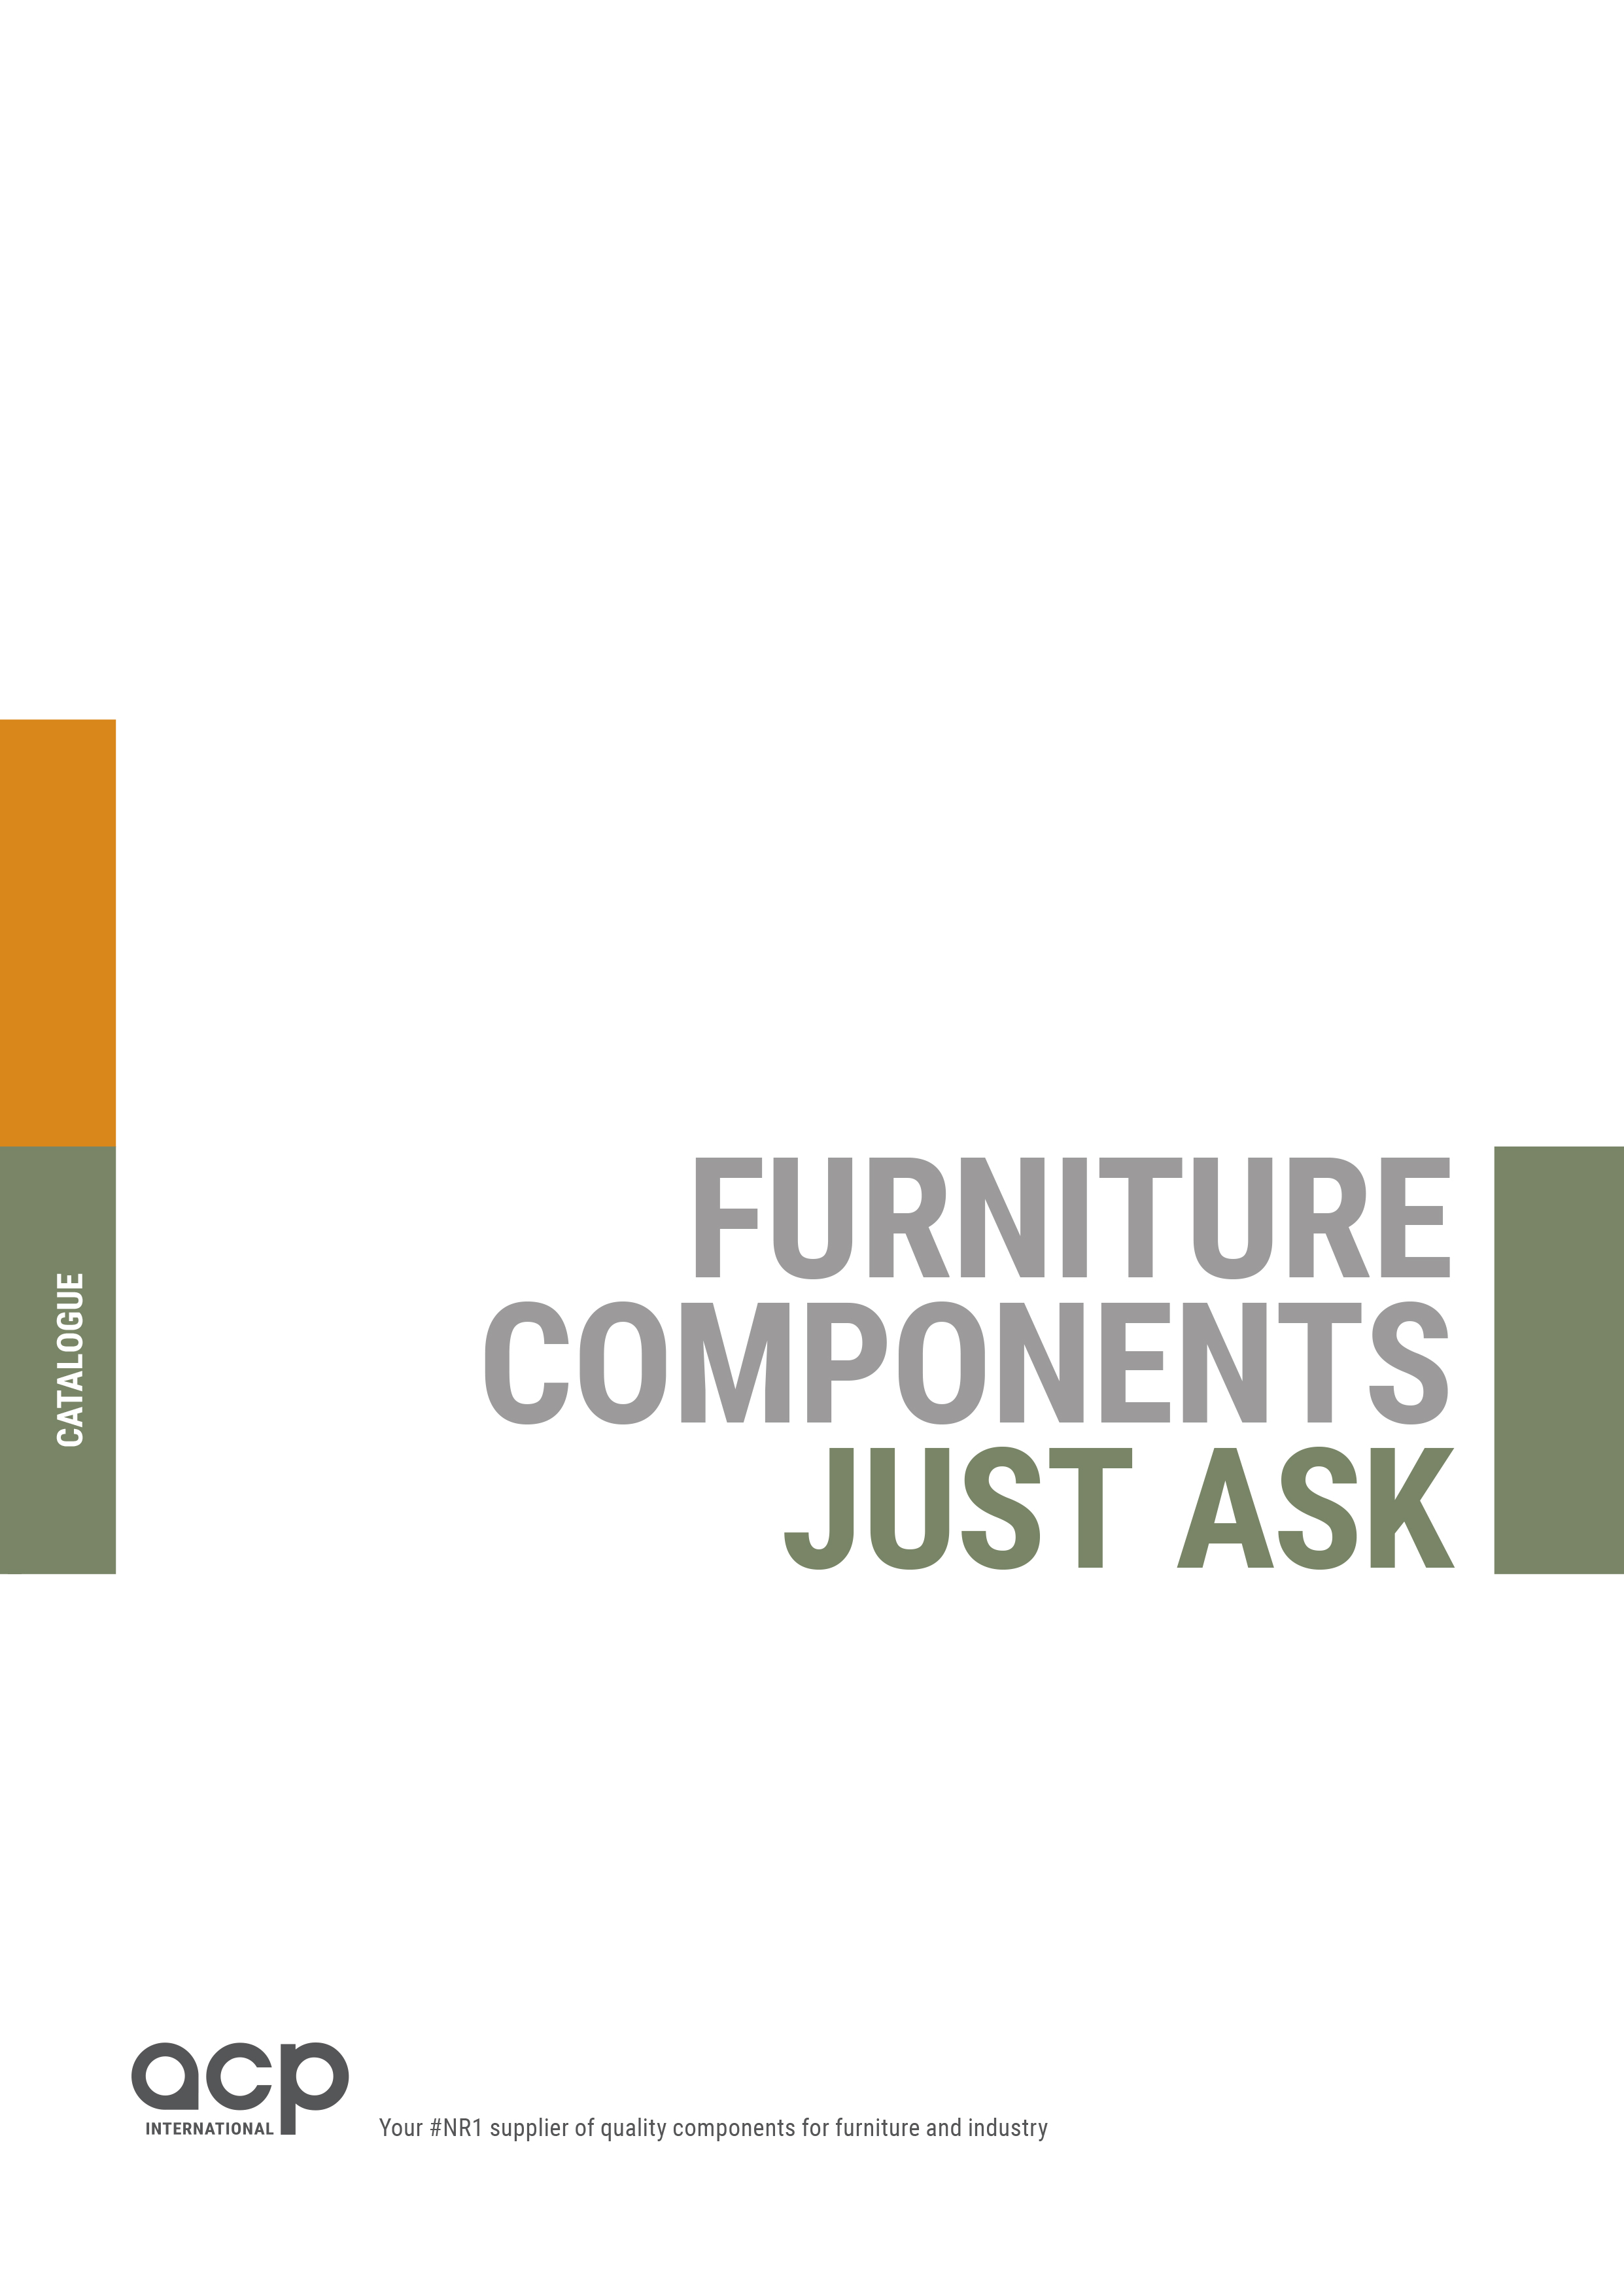  Furniture components